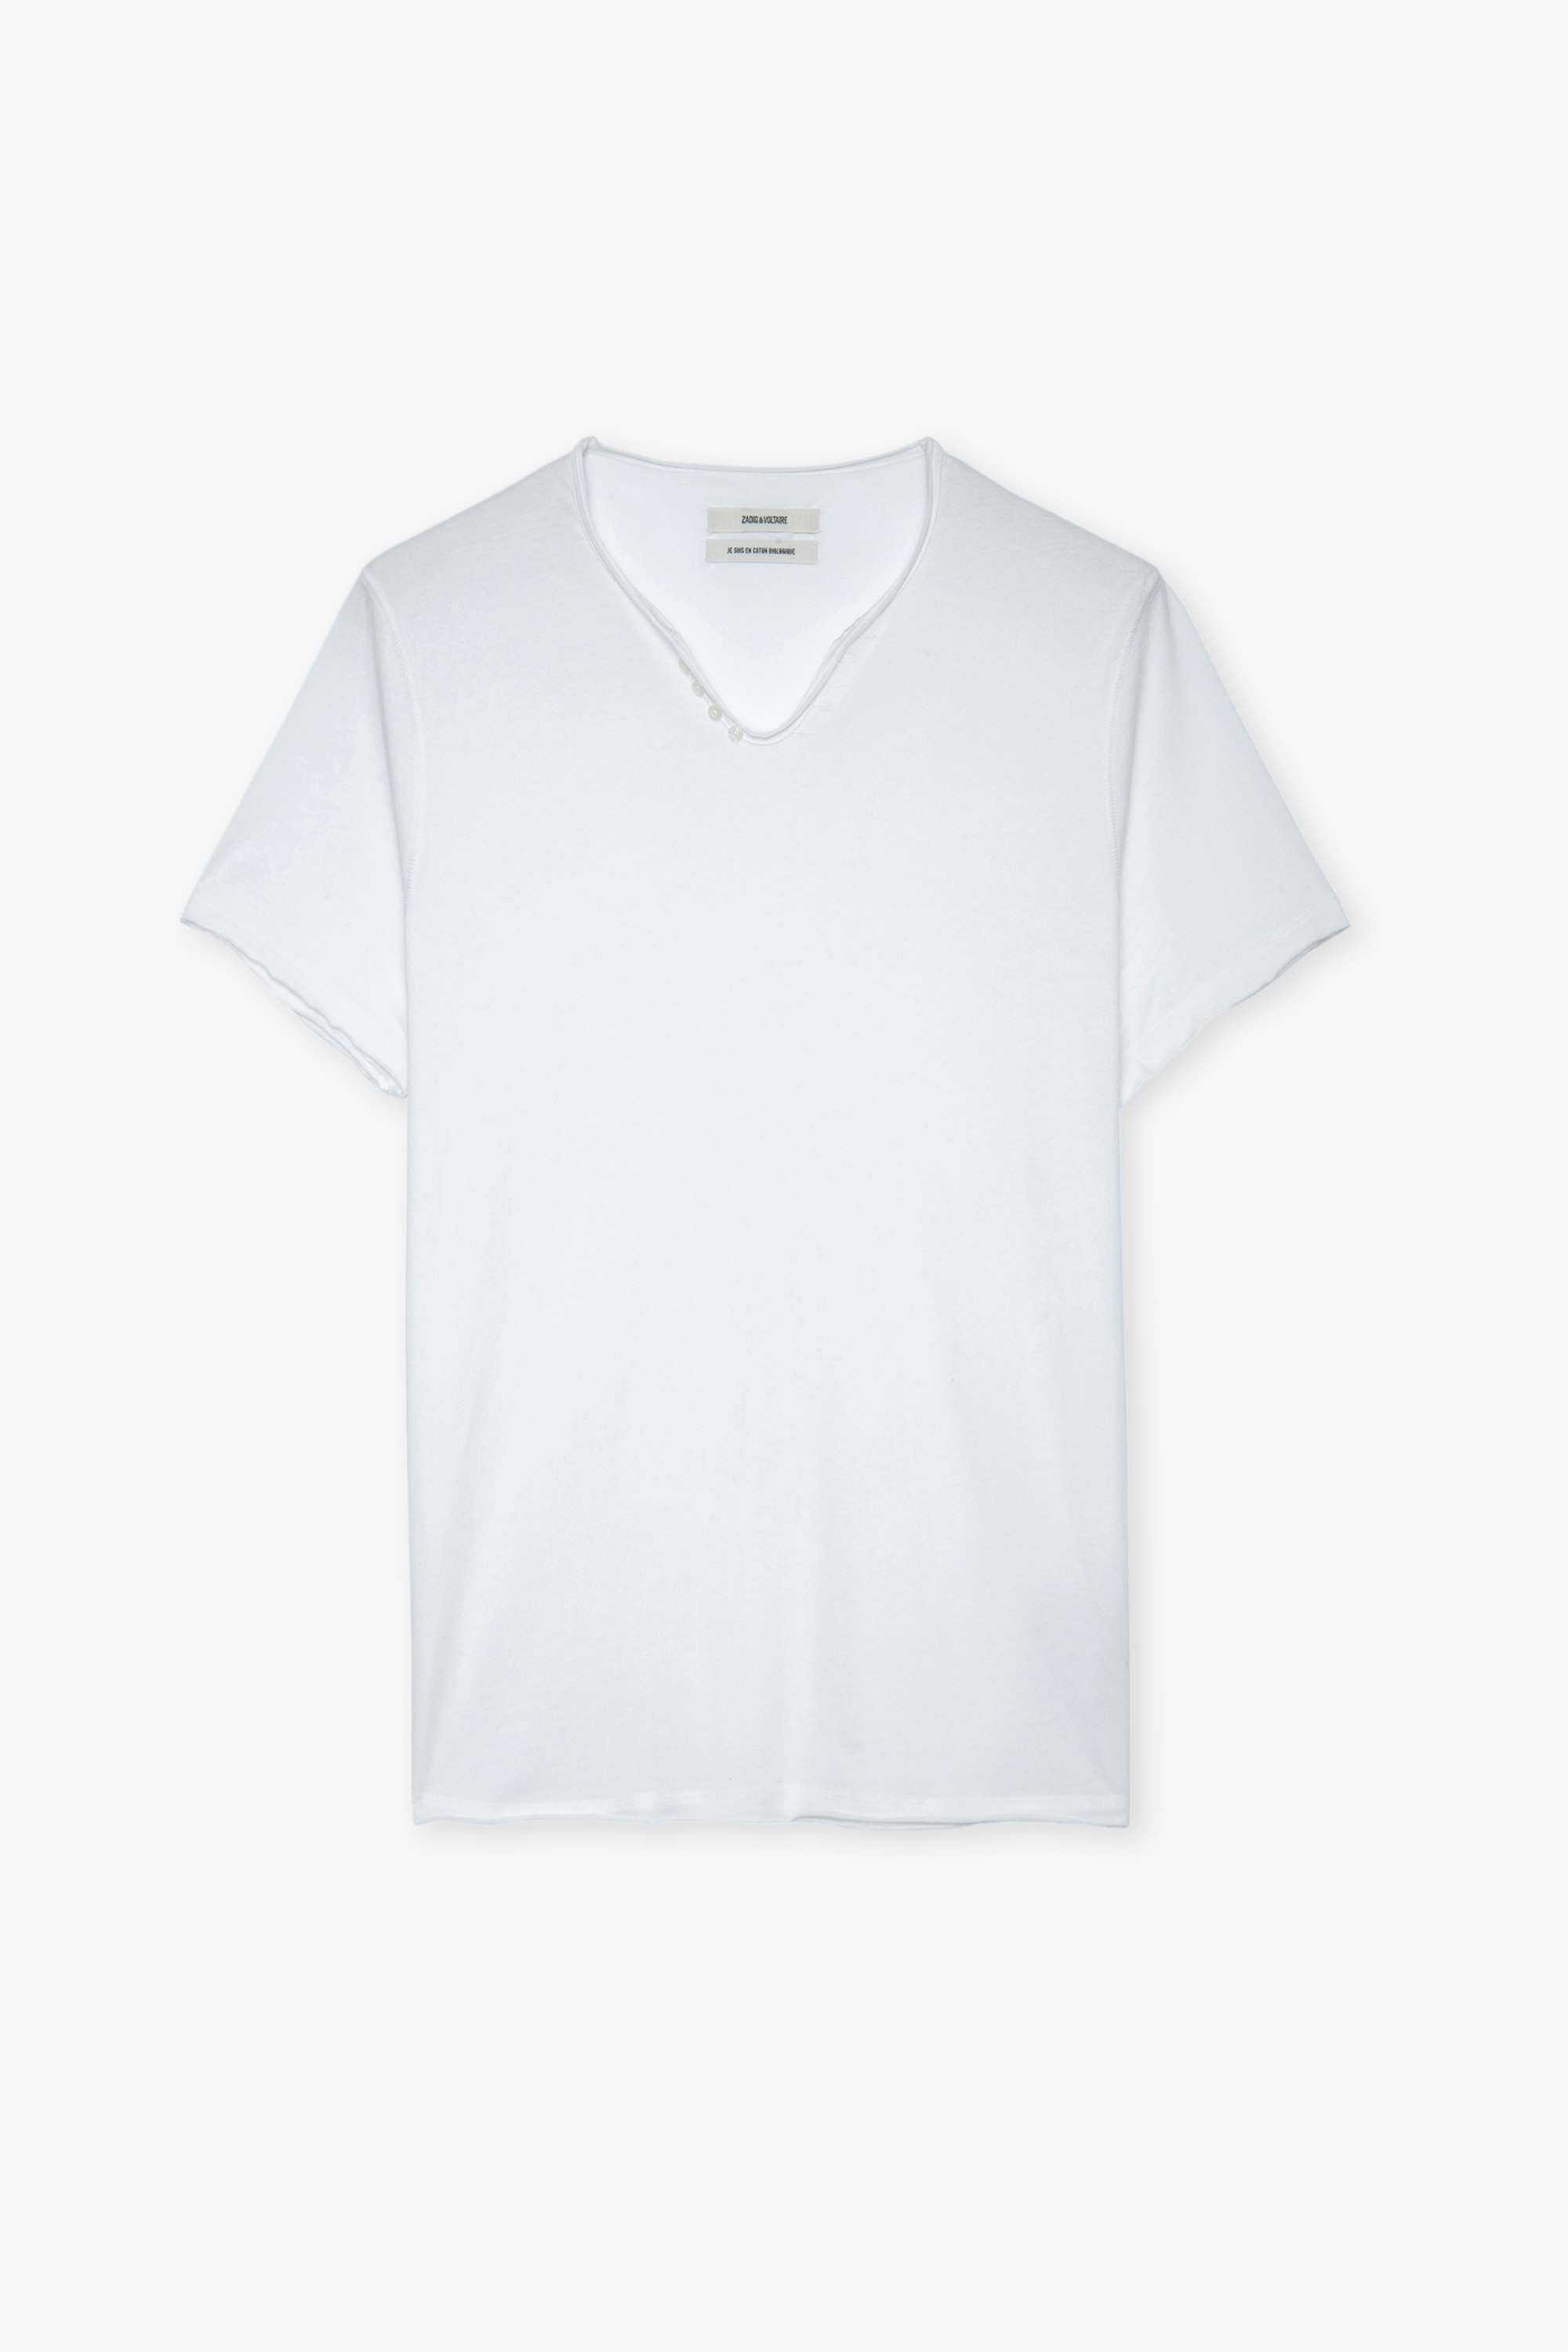 Monastir T-shirt - Men’s white T-shirt